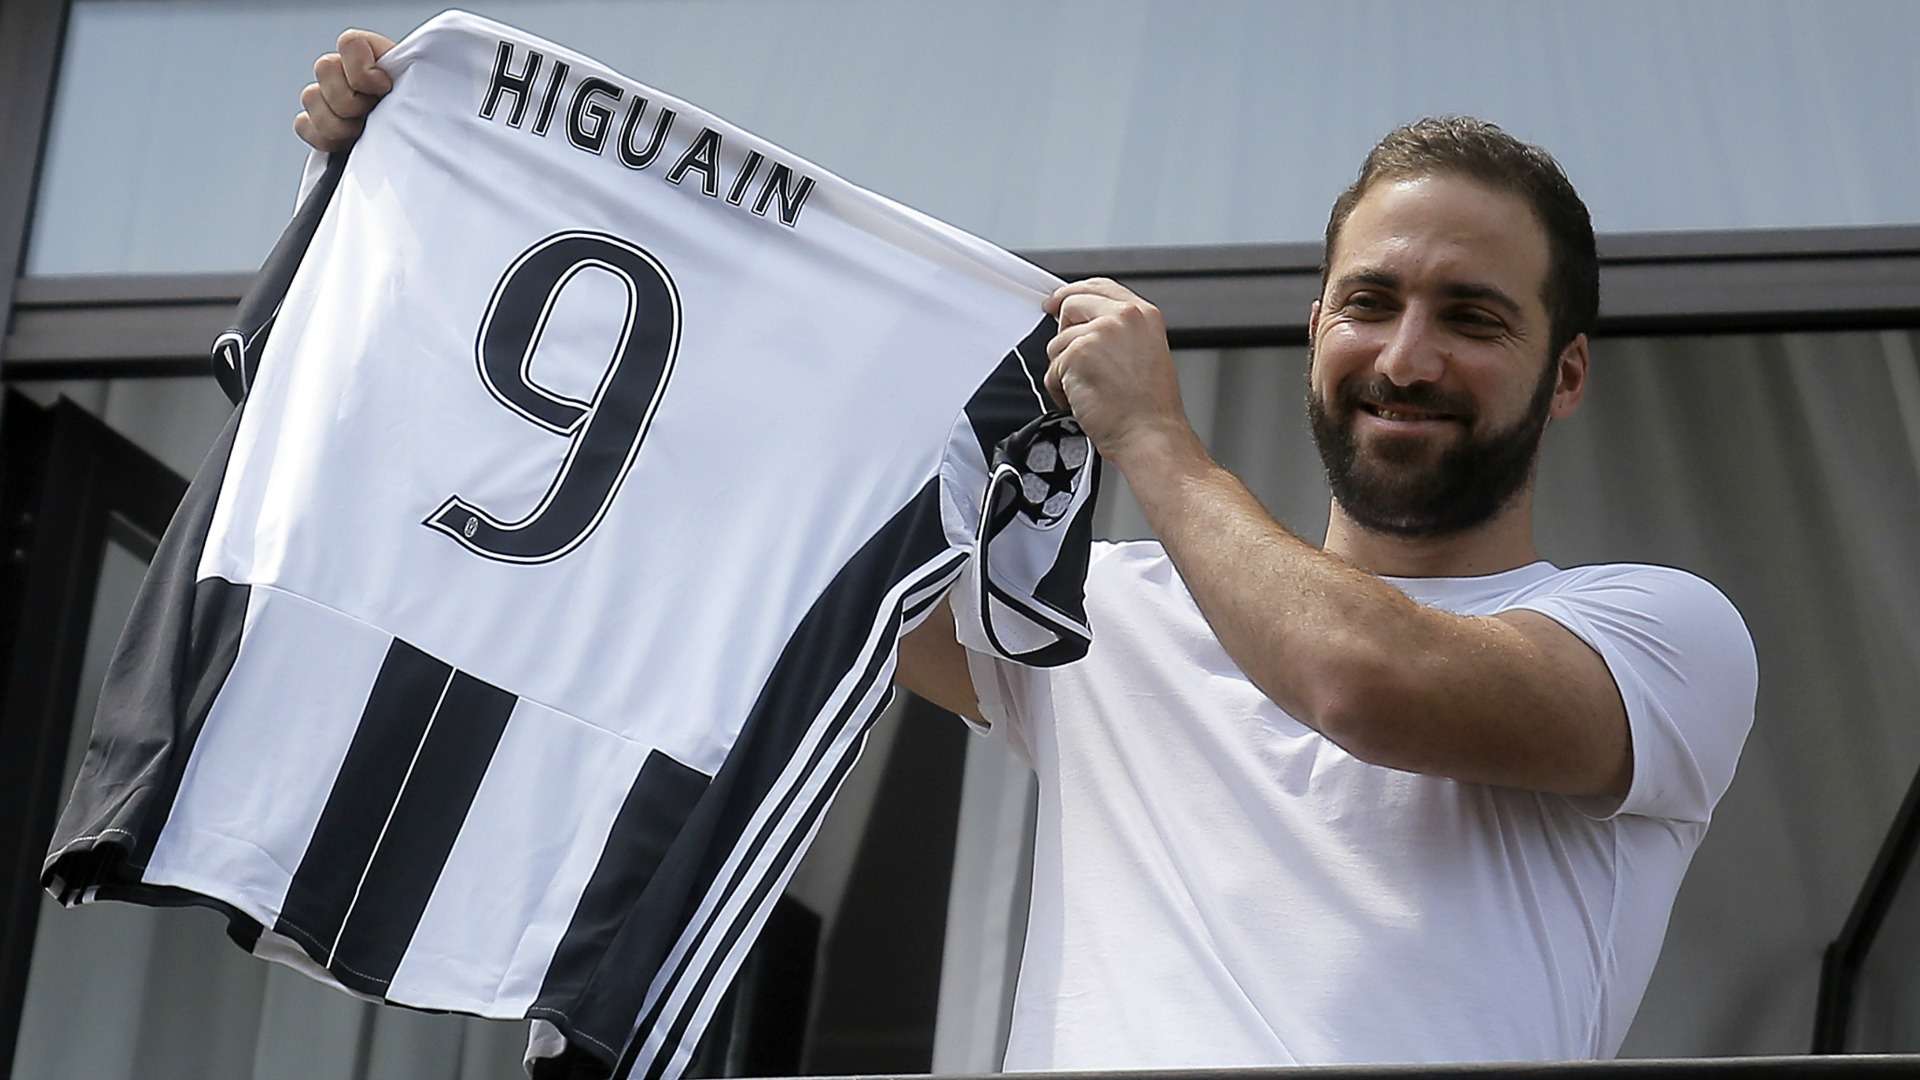 Gonzalo Higuain Juventus